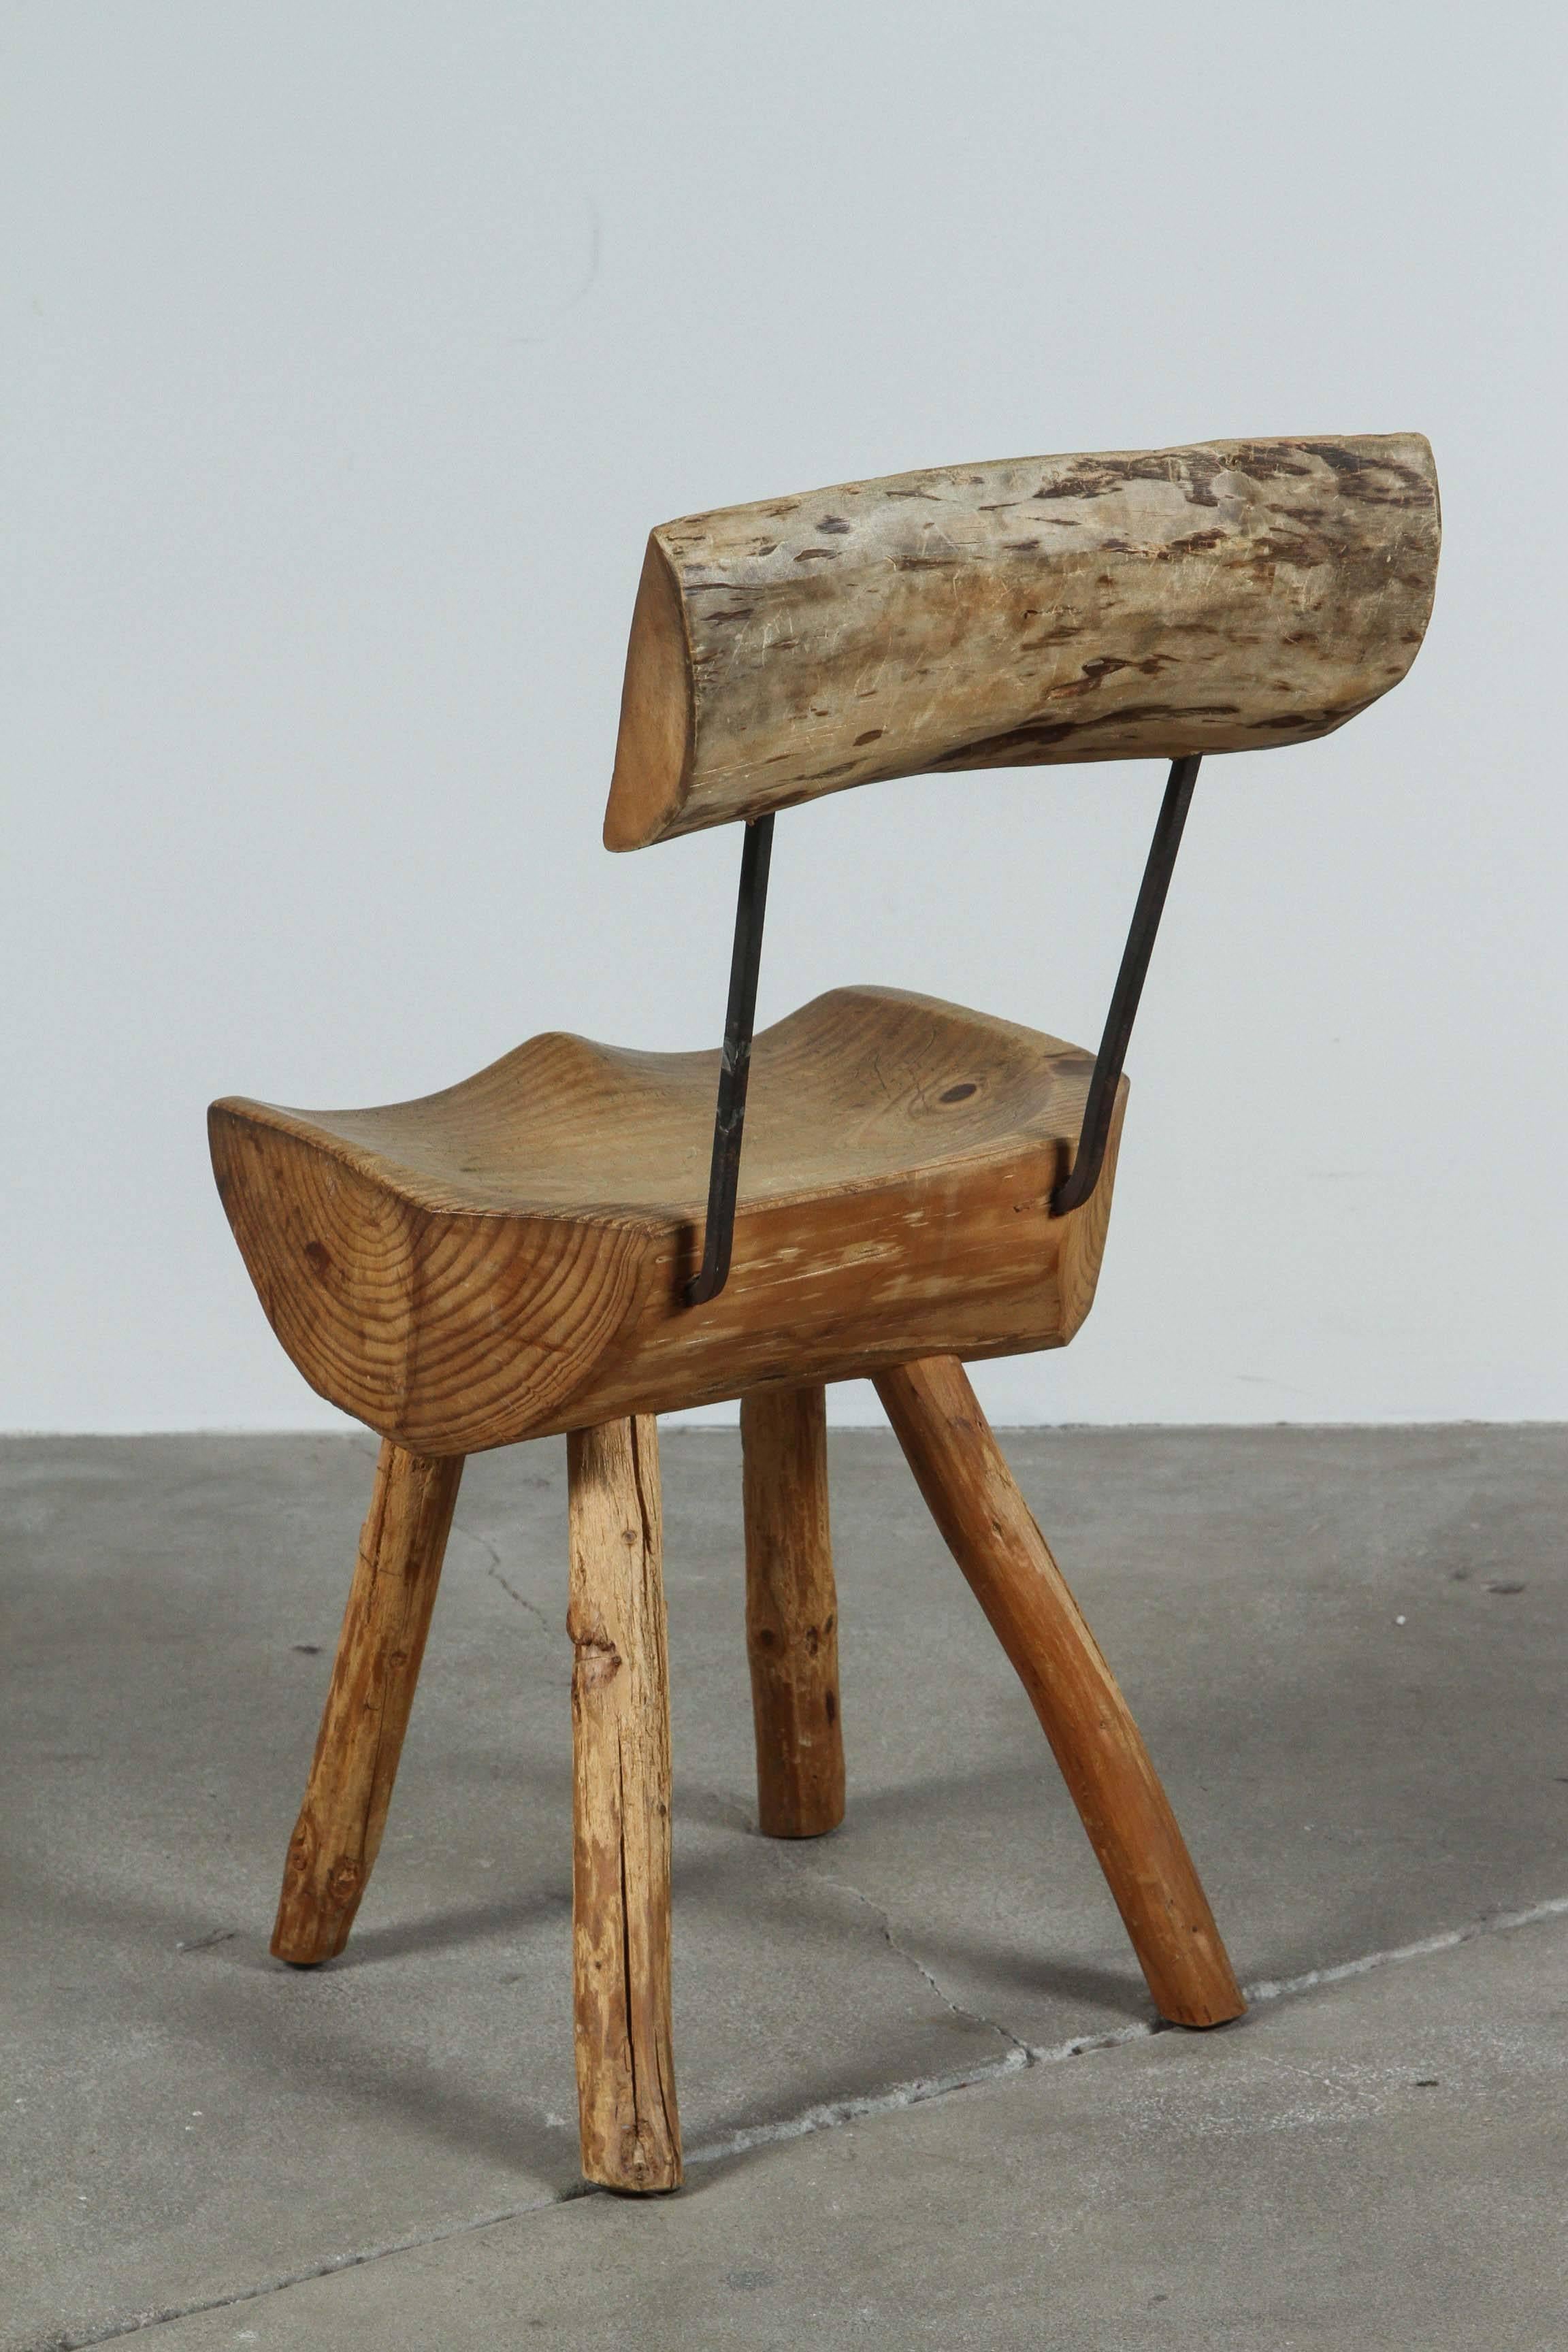 Rustic Log Chair 2